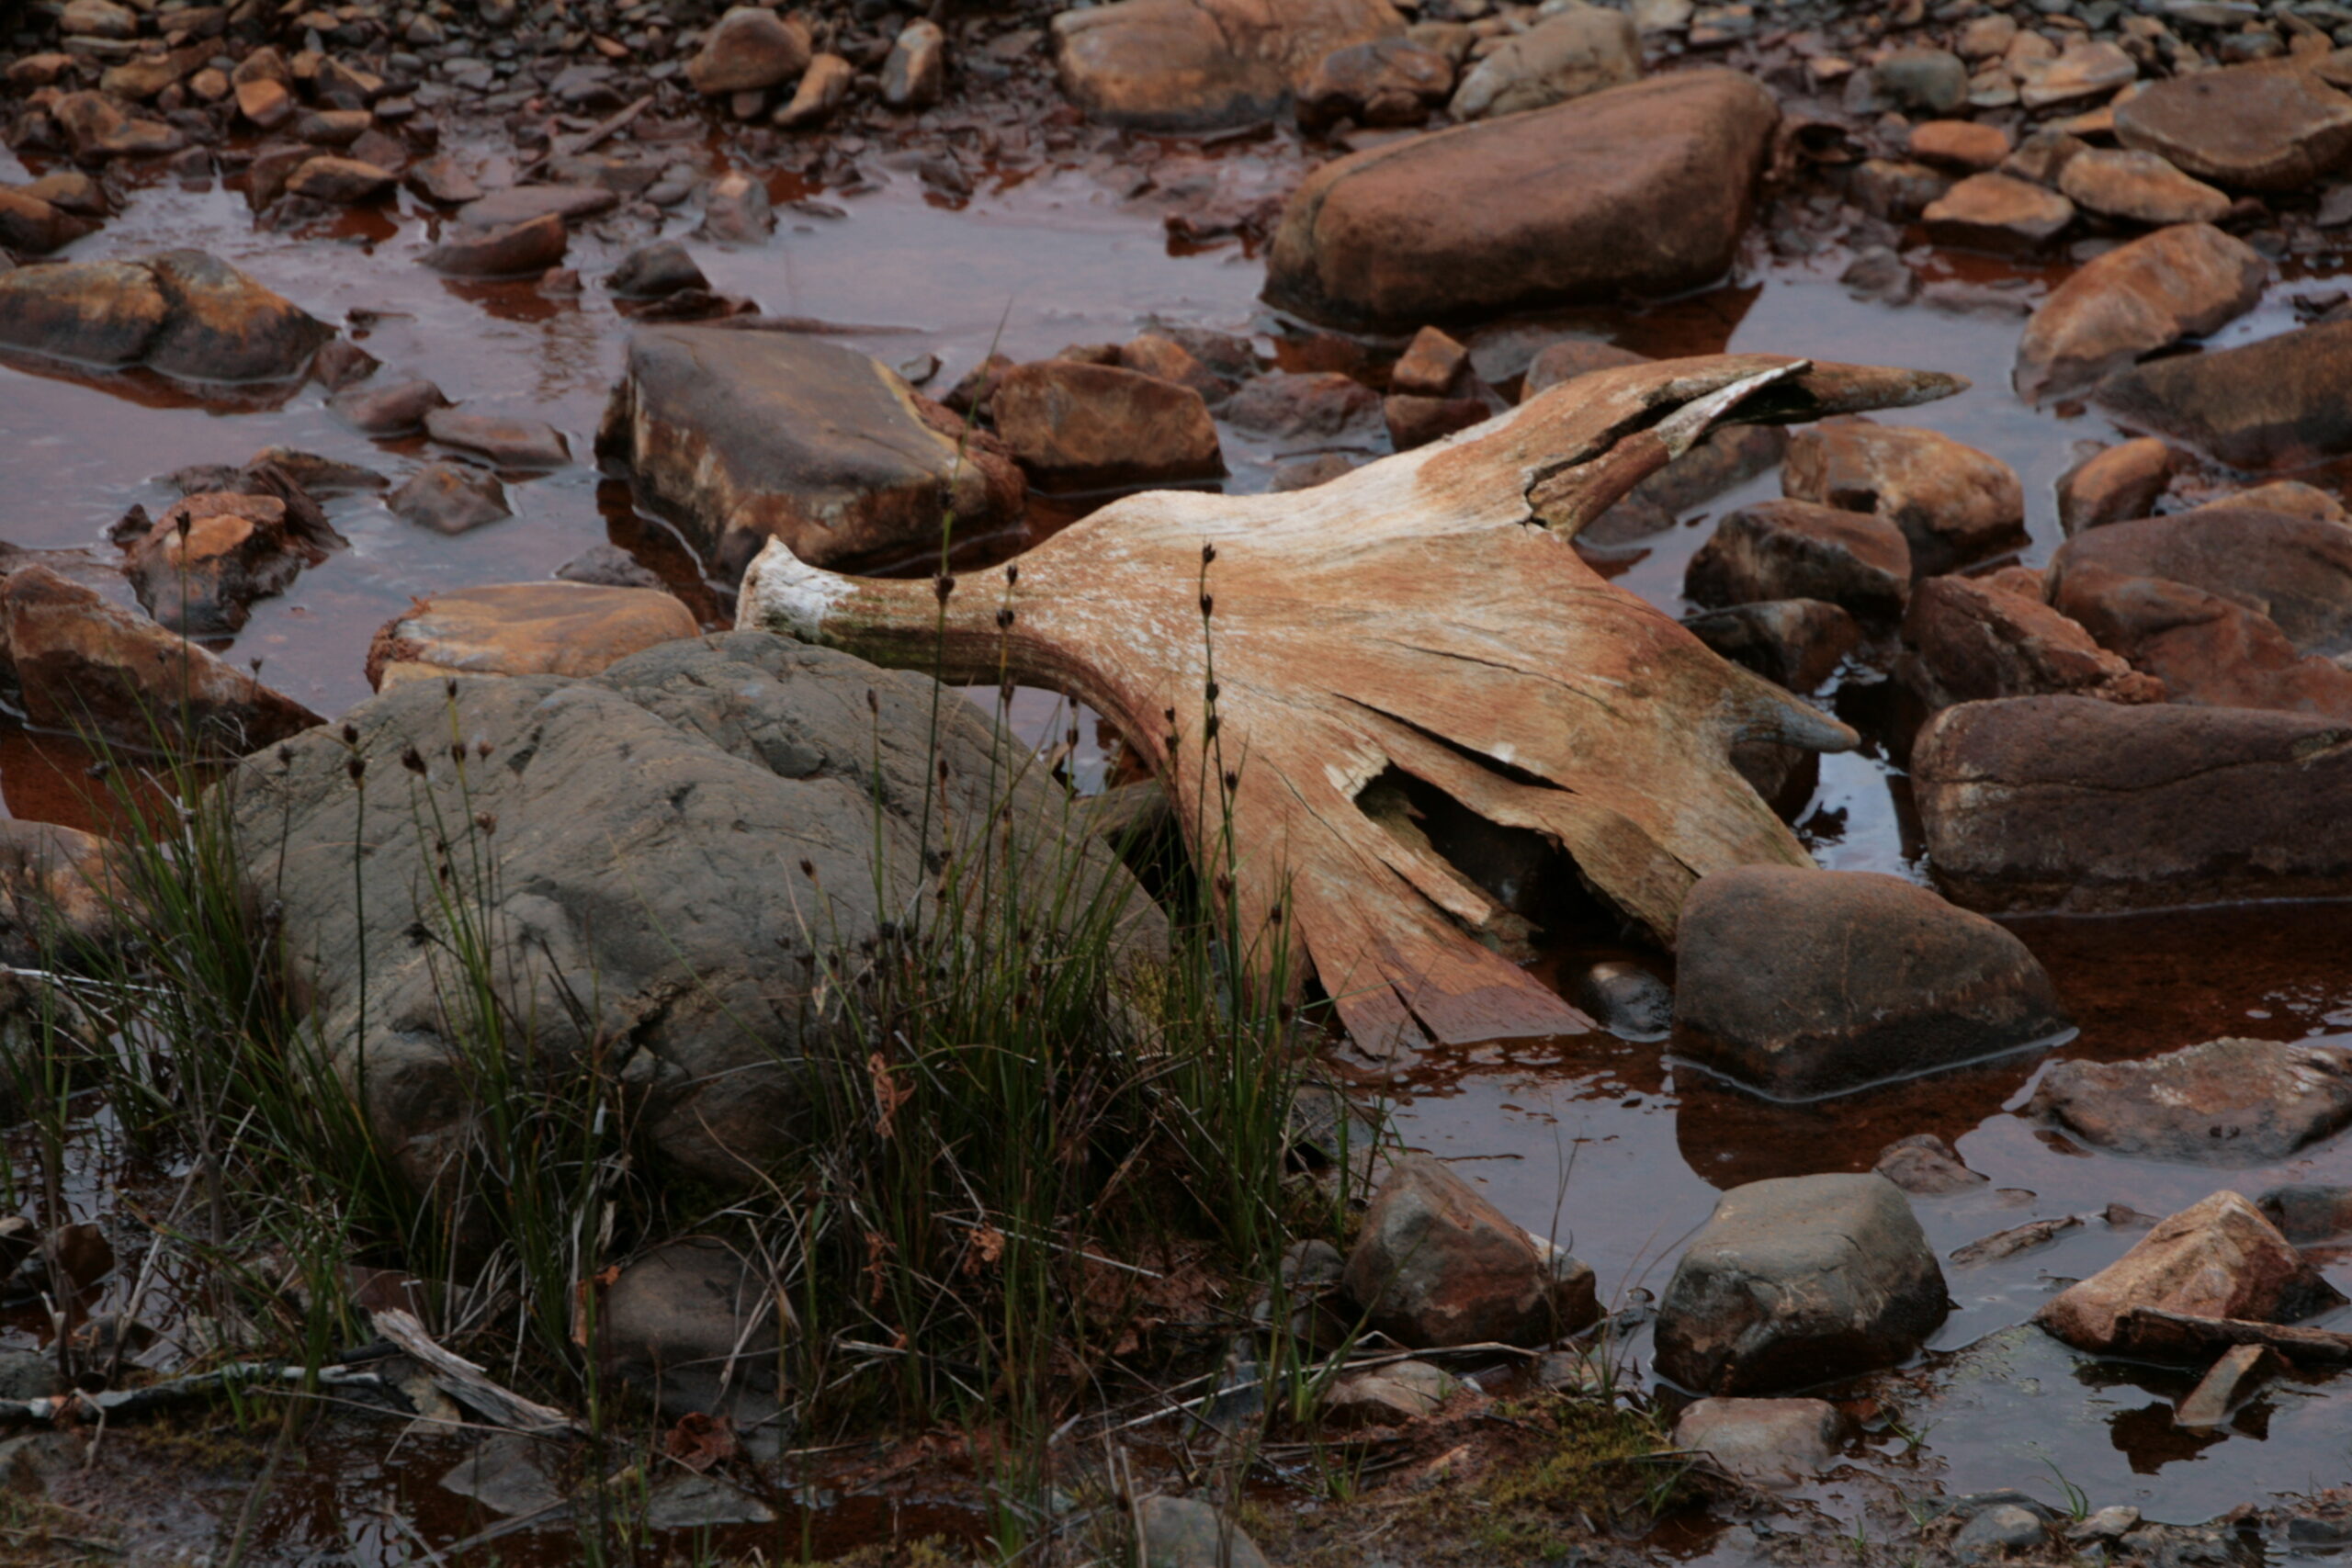 Shed moose antlers sit in muddy water near Windy Creek.